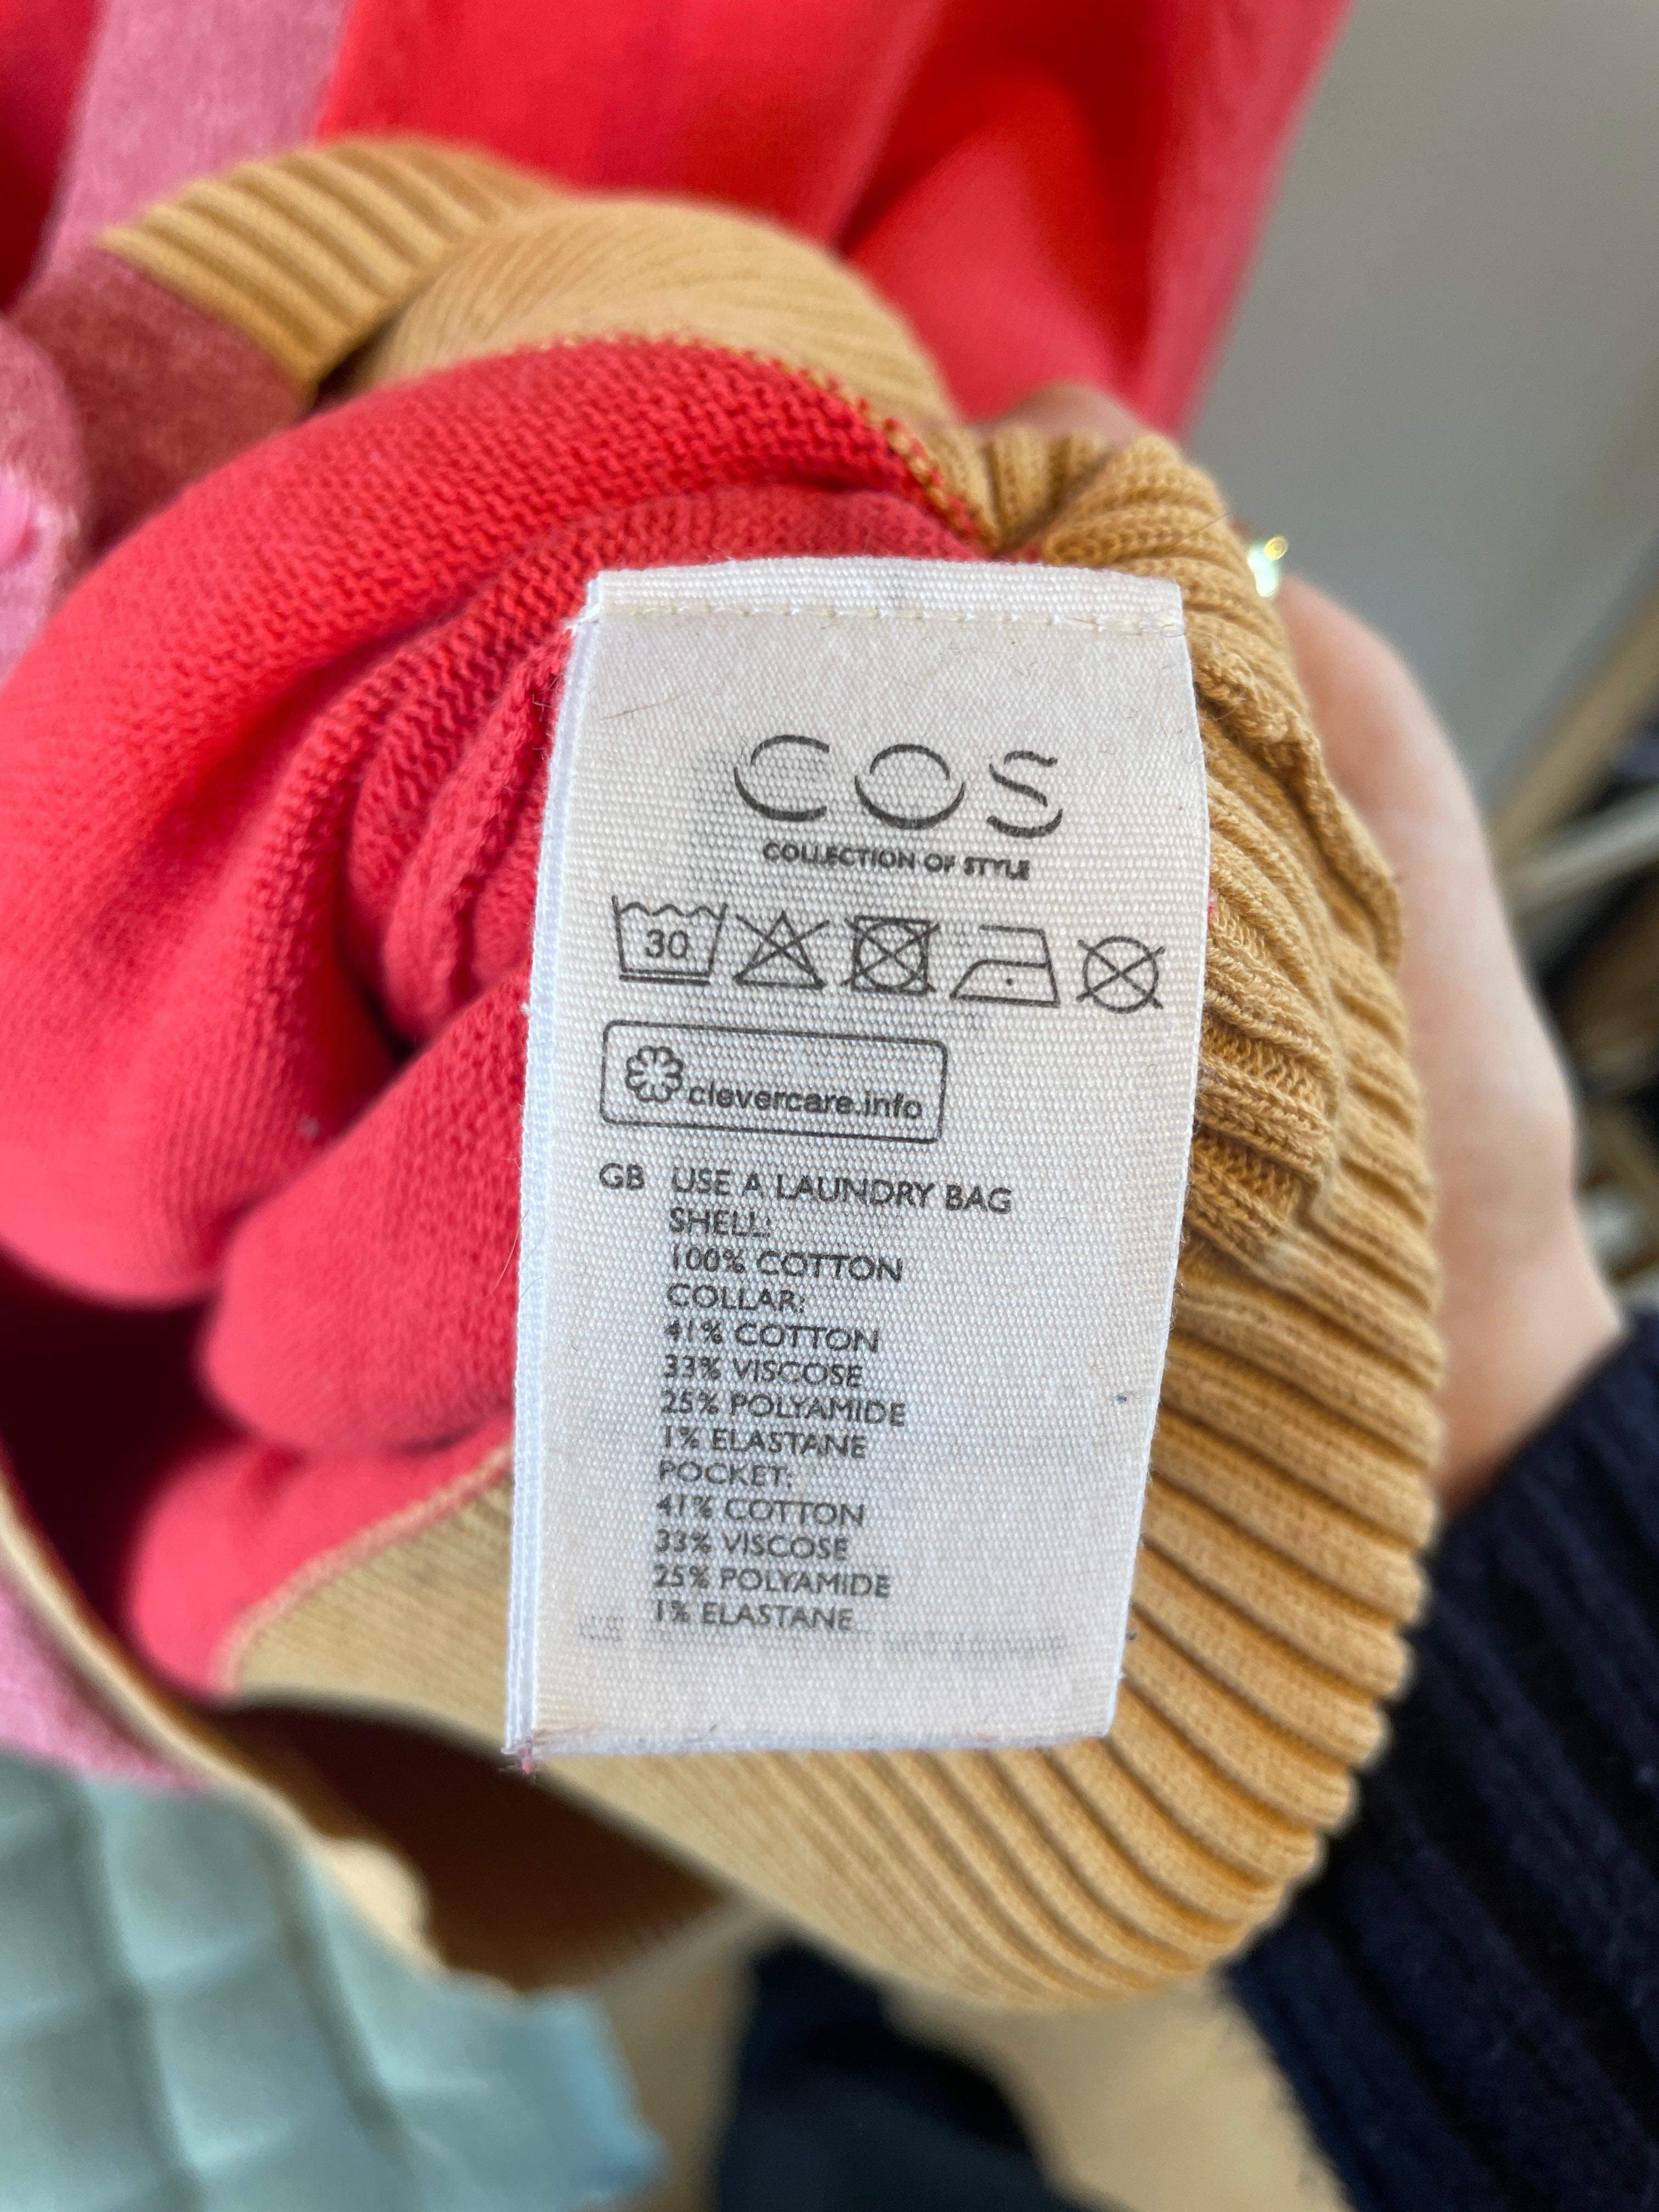 Cos - Cardigan - Size: S